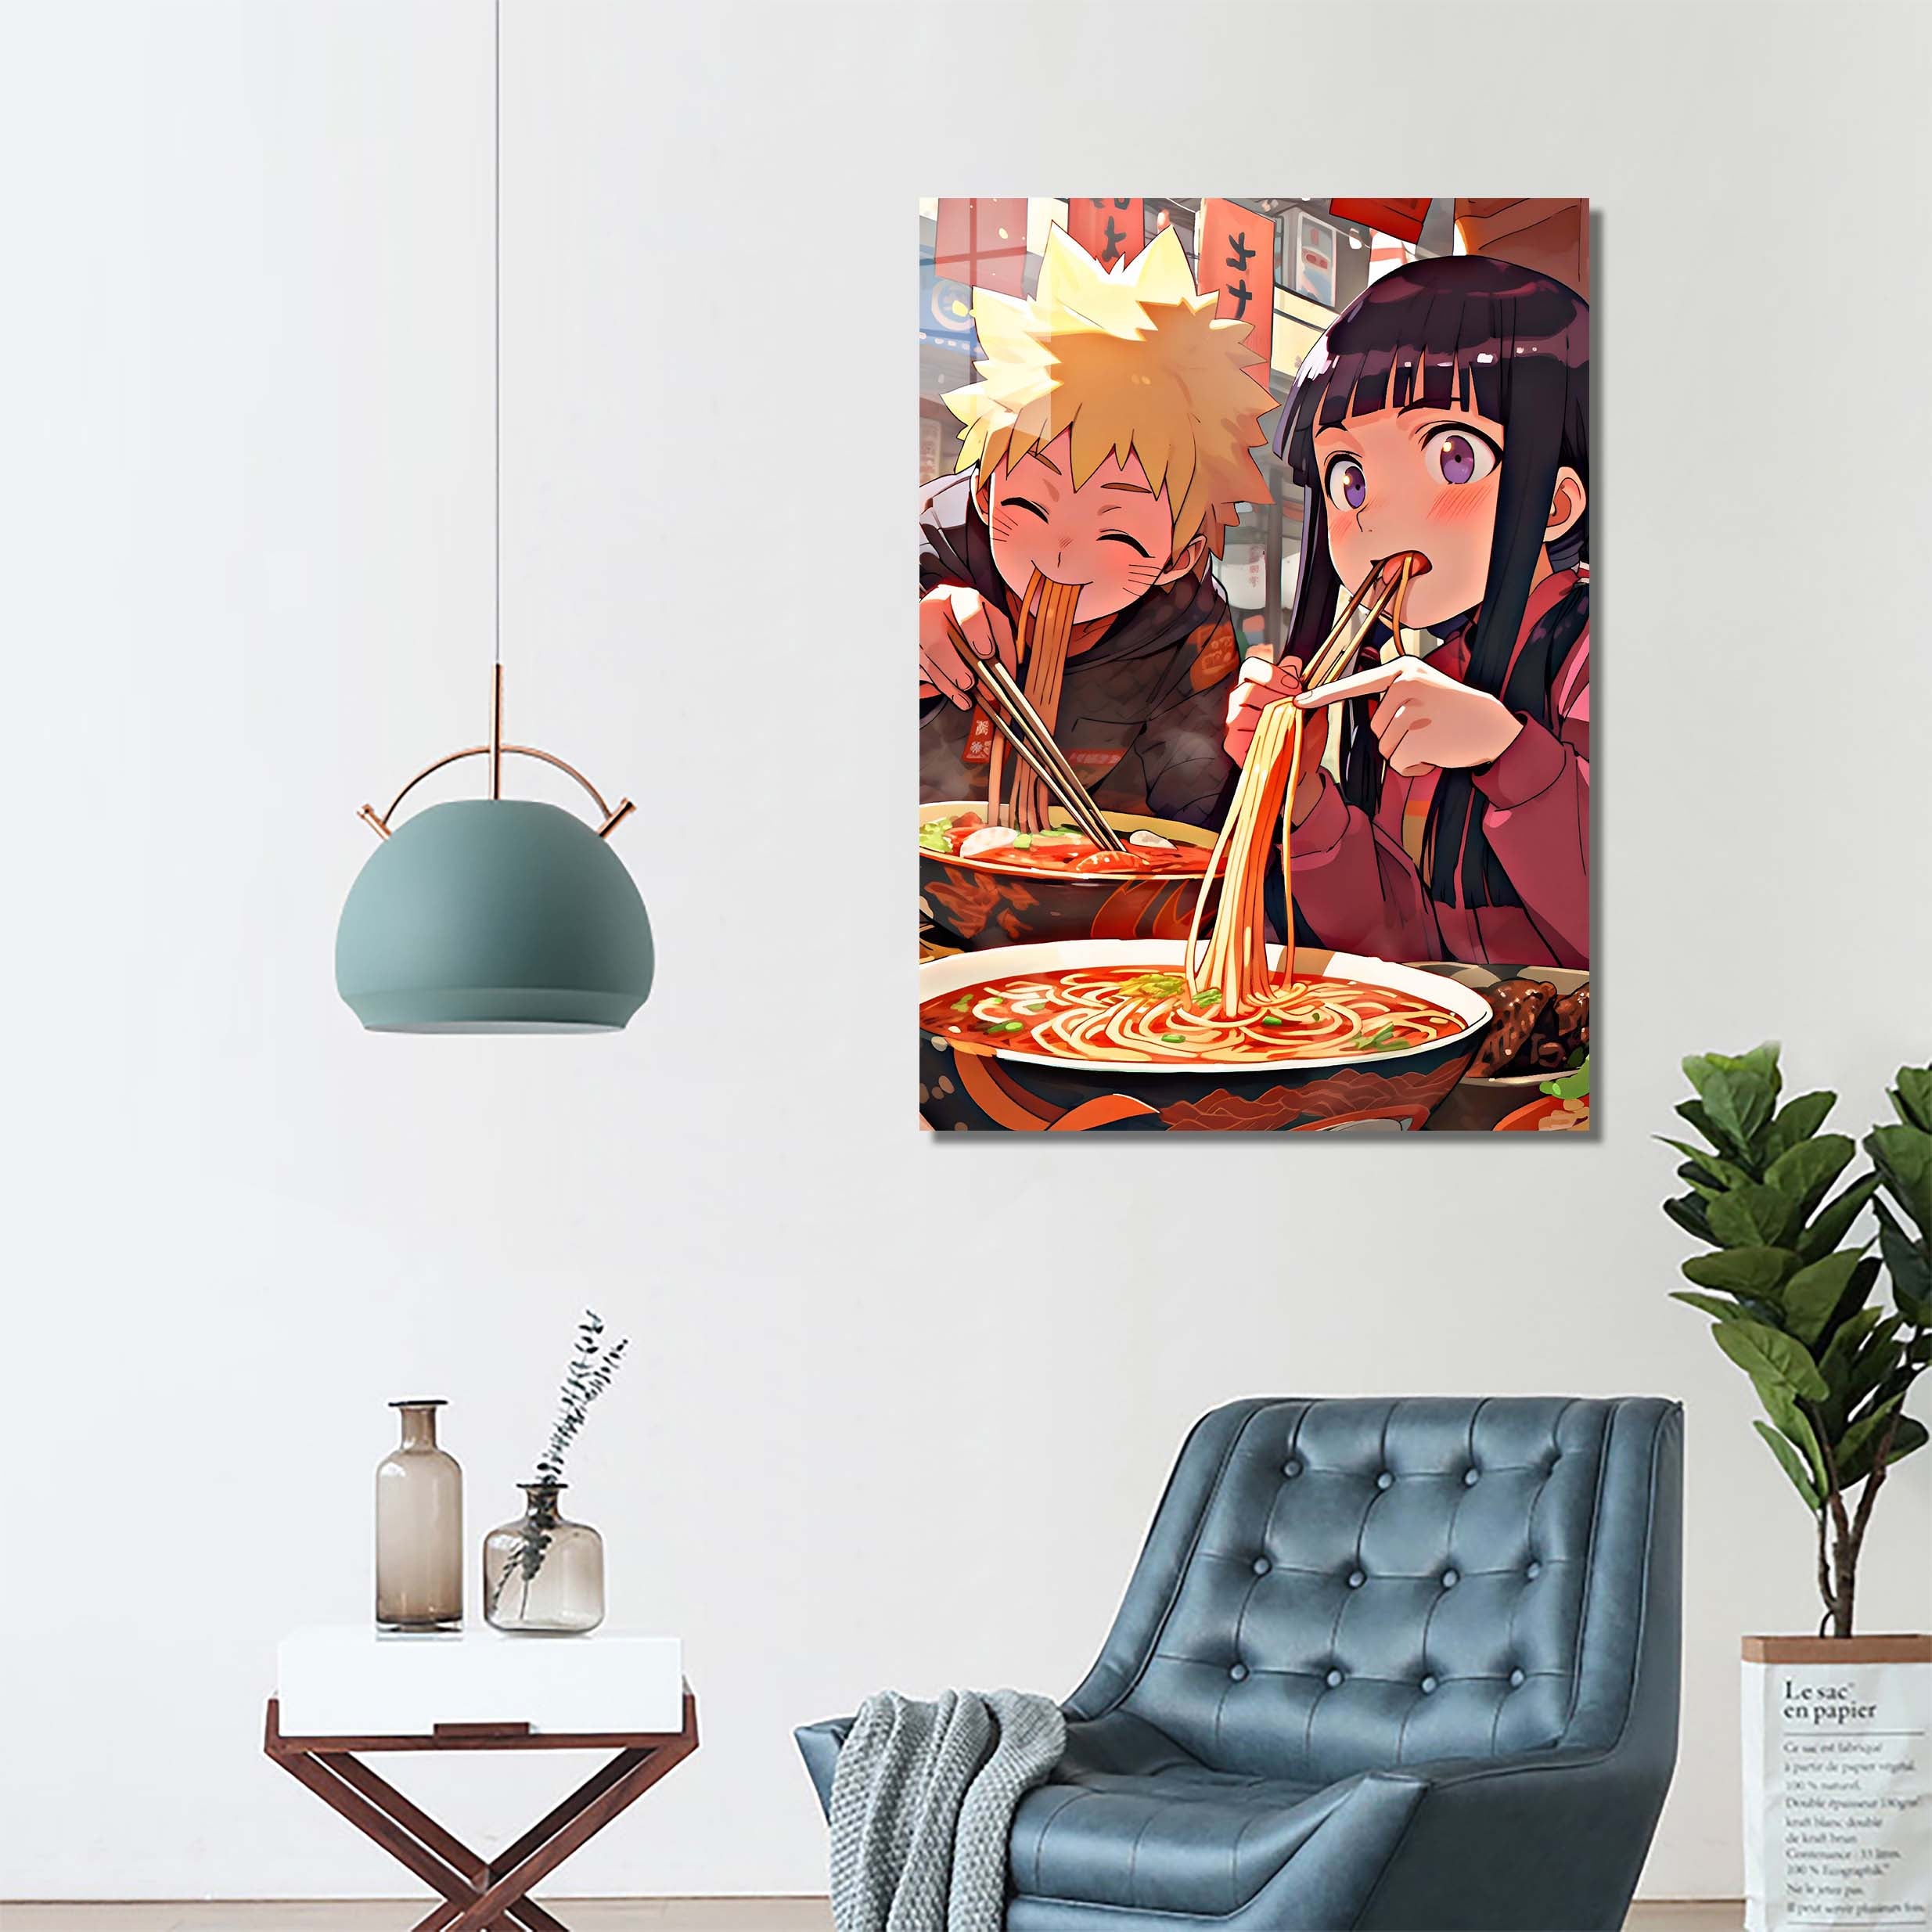 Naruto & Hinata Enjoy Ramen together-designed by @Vid_M@tion